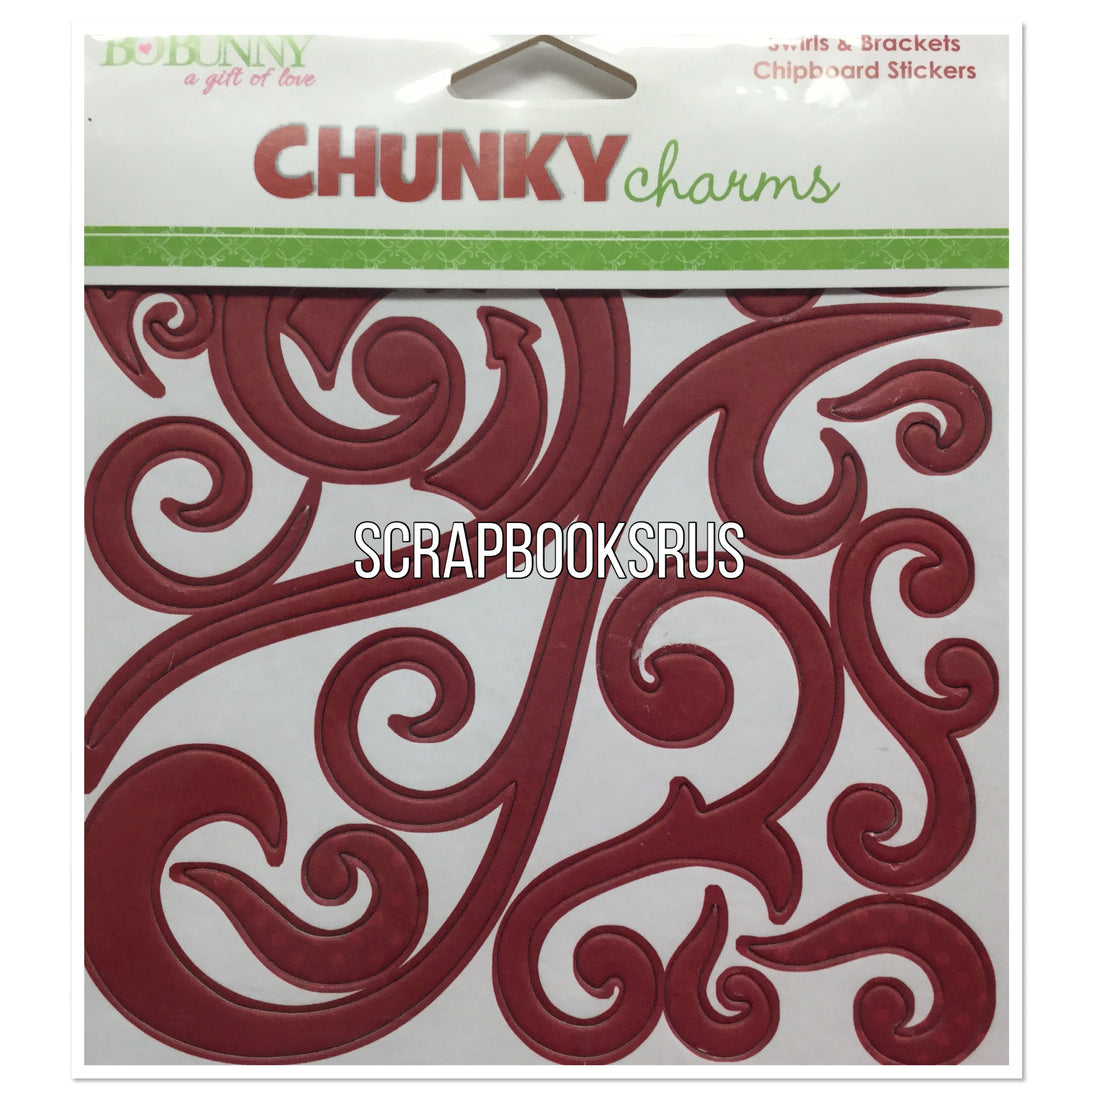 BoBunny CHUNKY CHARMS Swirls and Brackets 18 pc